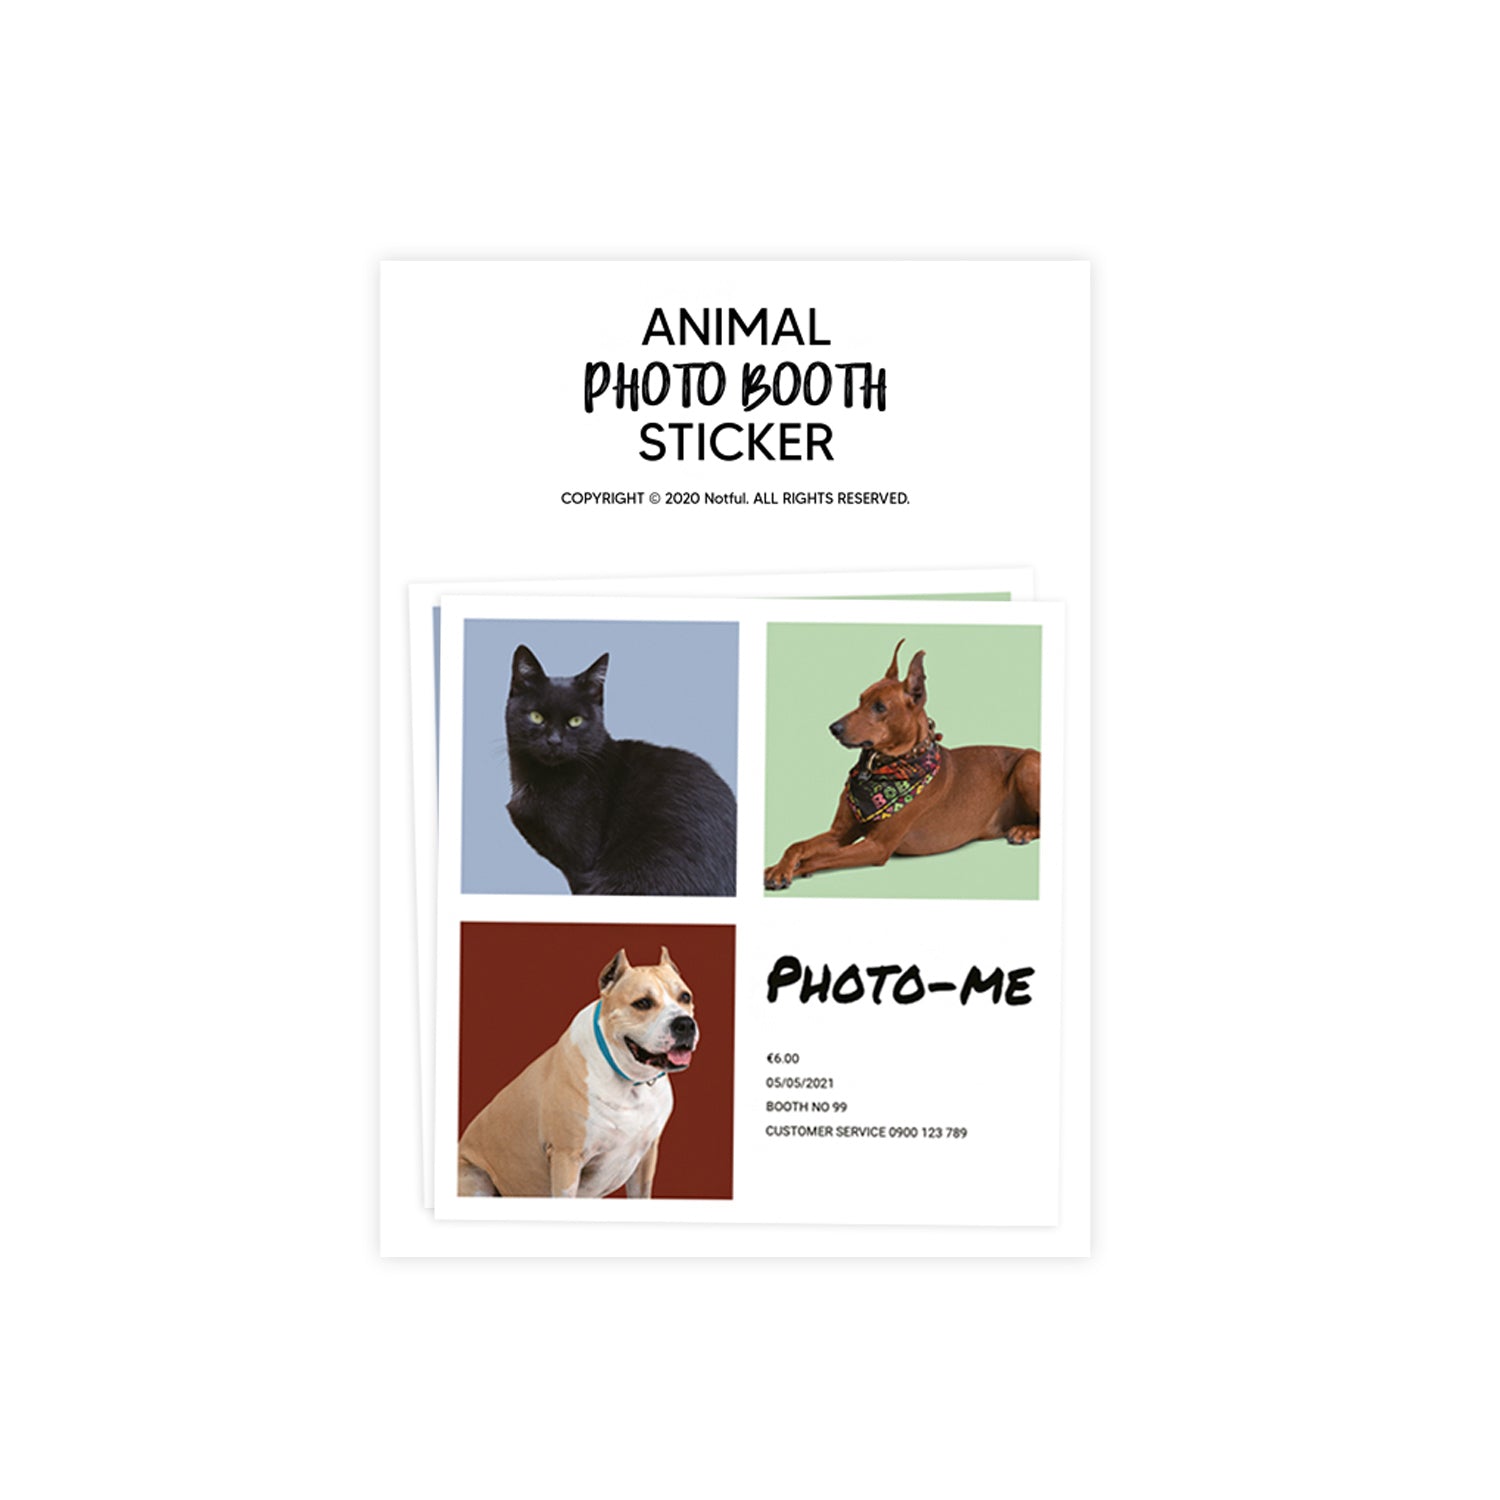 Animal photo sticker